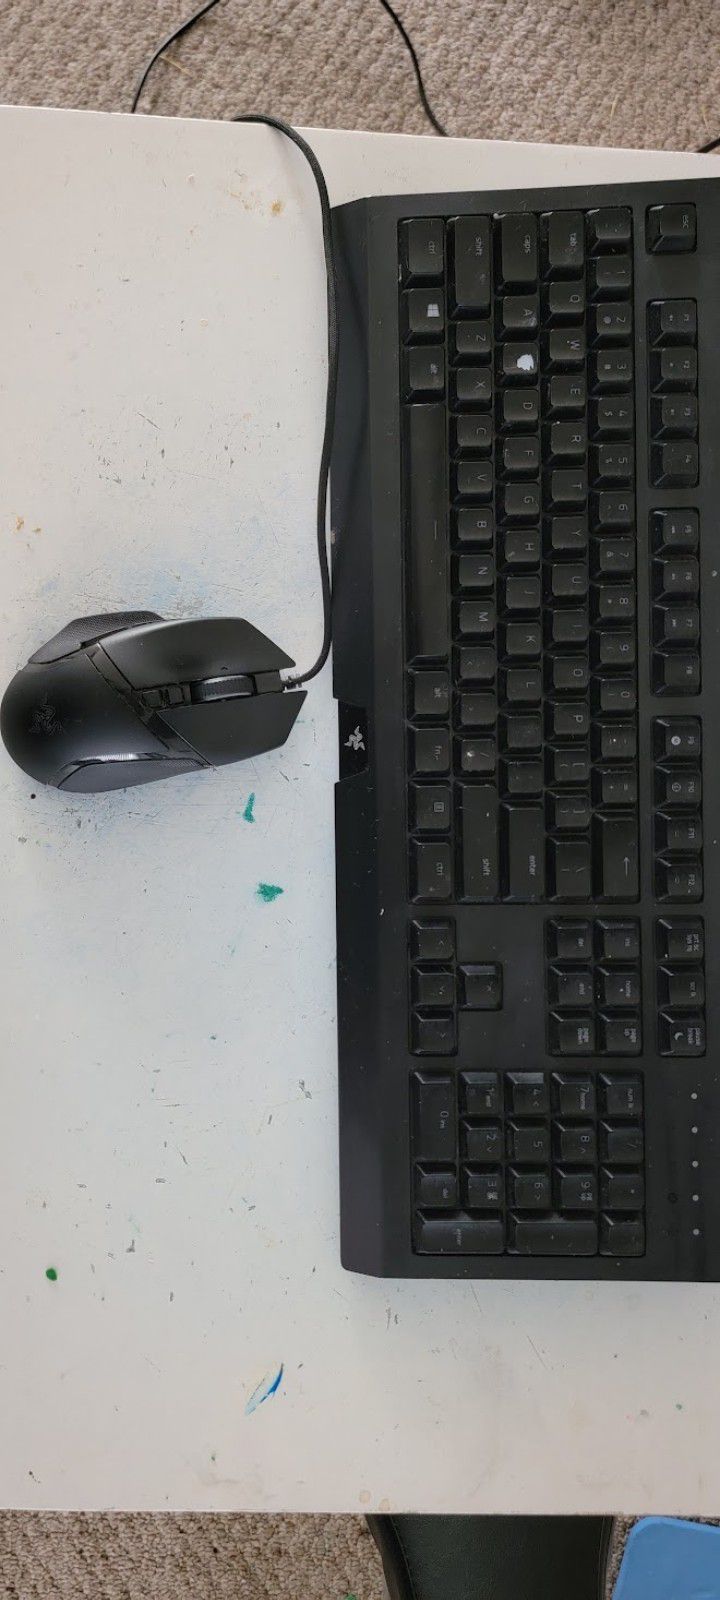 Razer Mouse/keyboard 